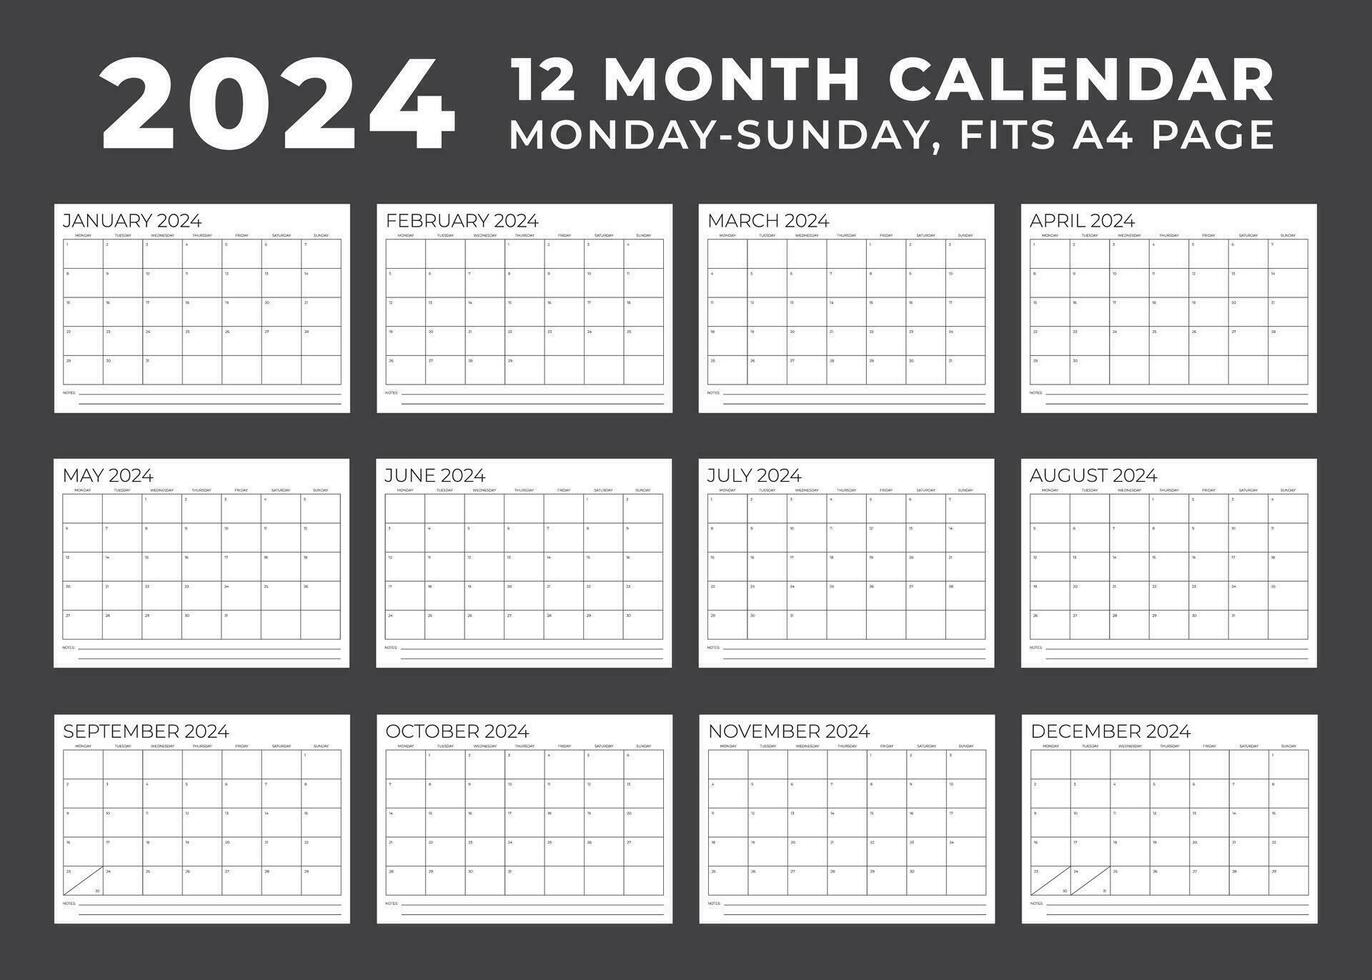 Calendar Template For 2024. Monday To Sunday. 12 Month Calendar | Blank 2024 Calendar